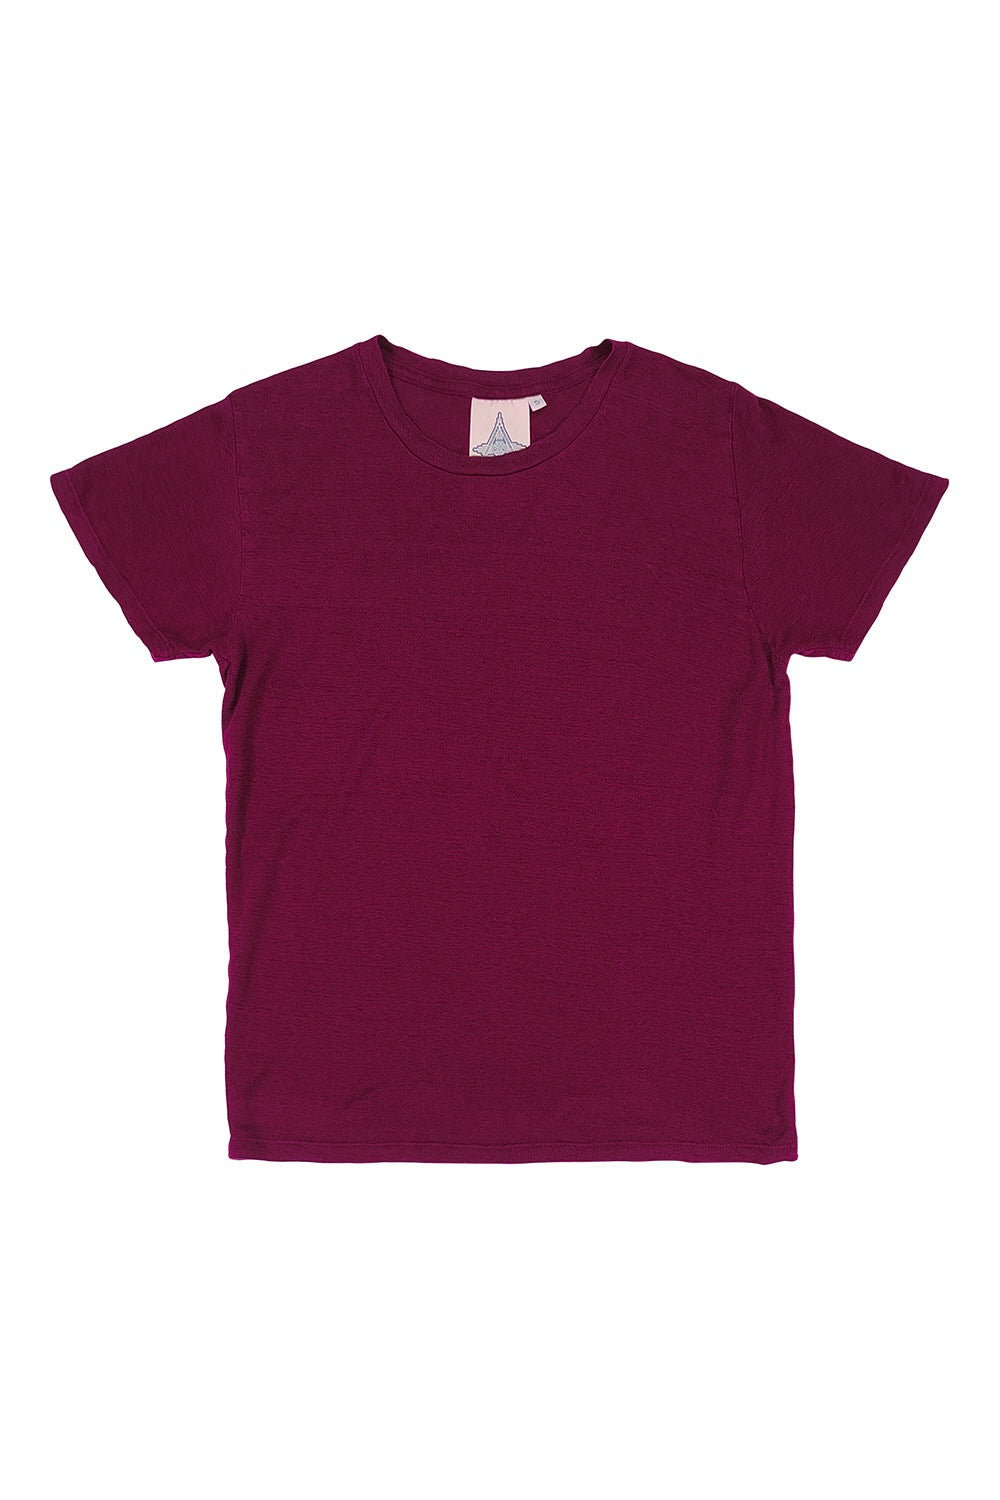 Madison 100% Hemp Tee | Jungmaven Hemp Clothing & Accessories / Color: Burgundy